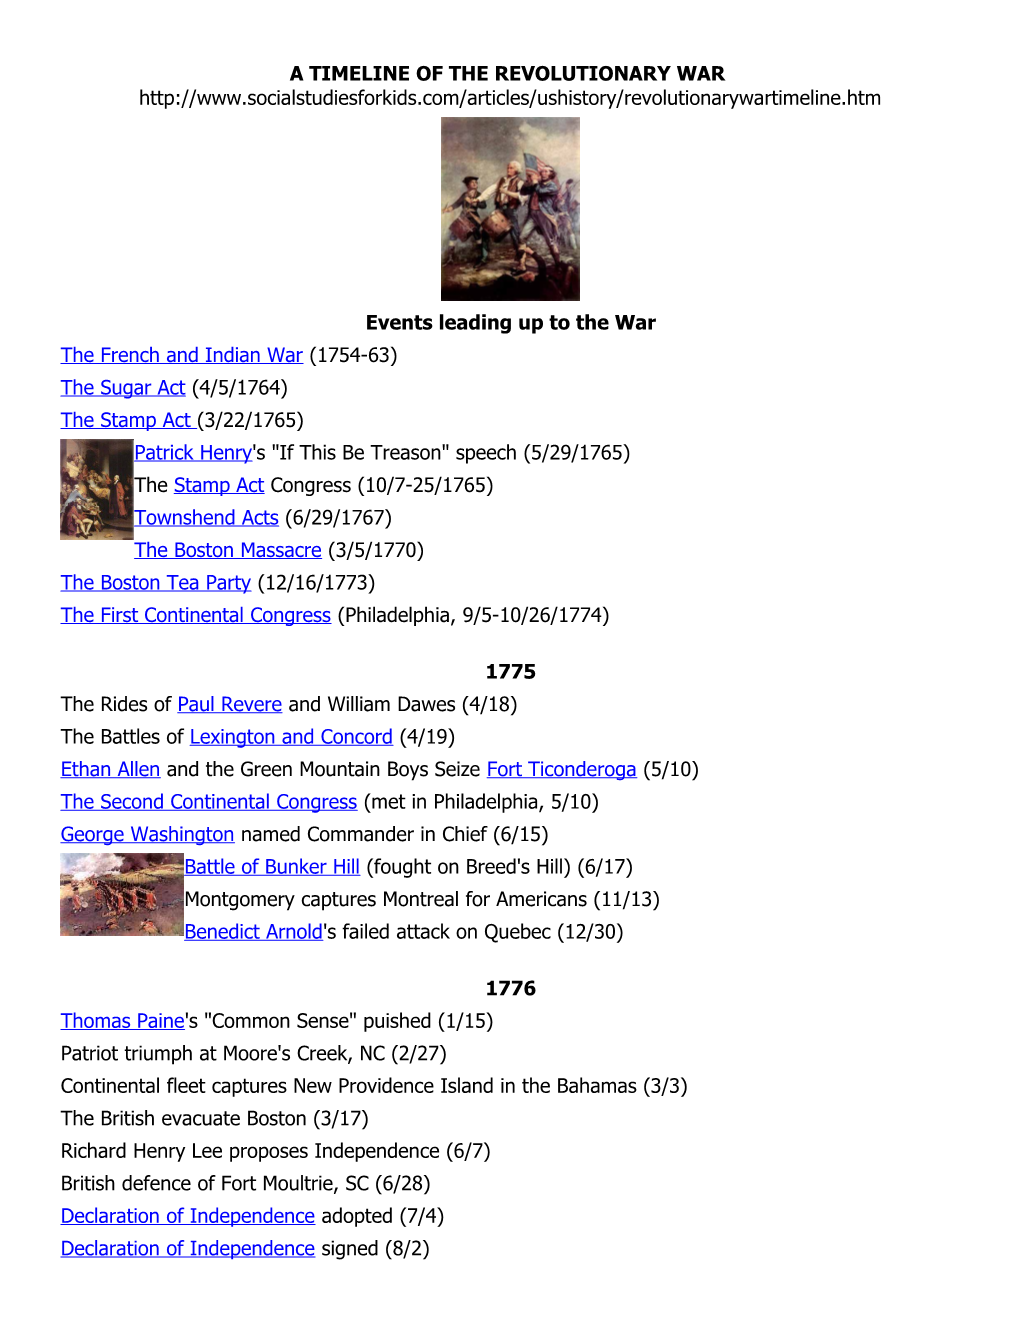 A Timeline of the Revolutionary War